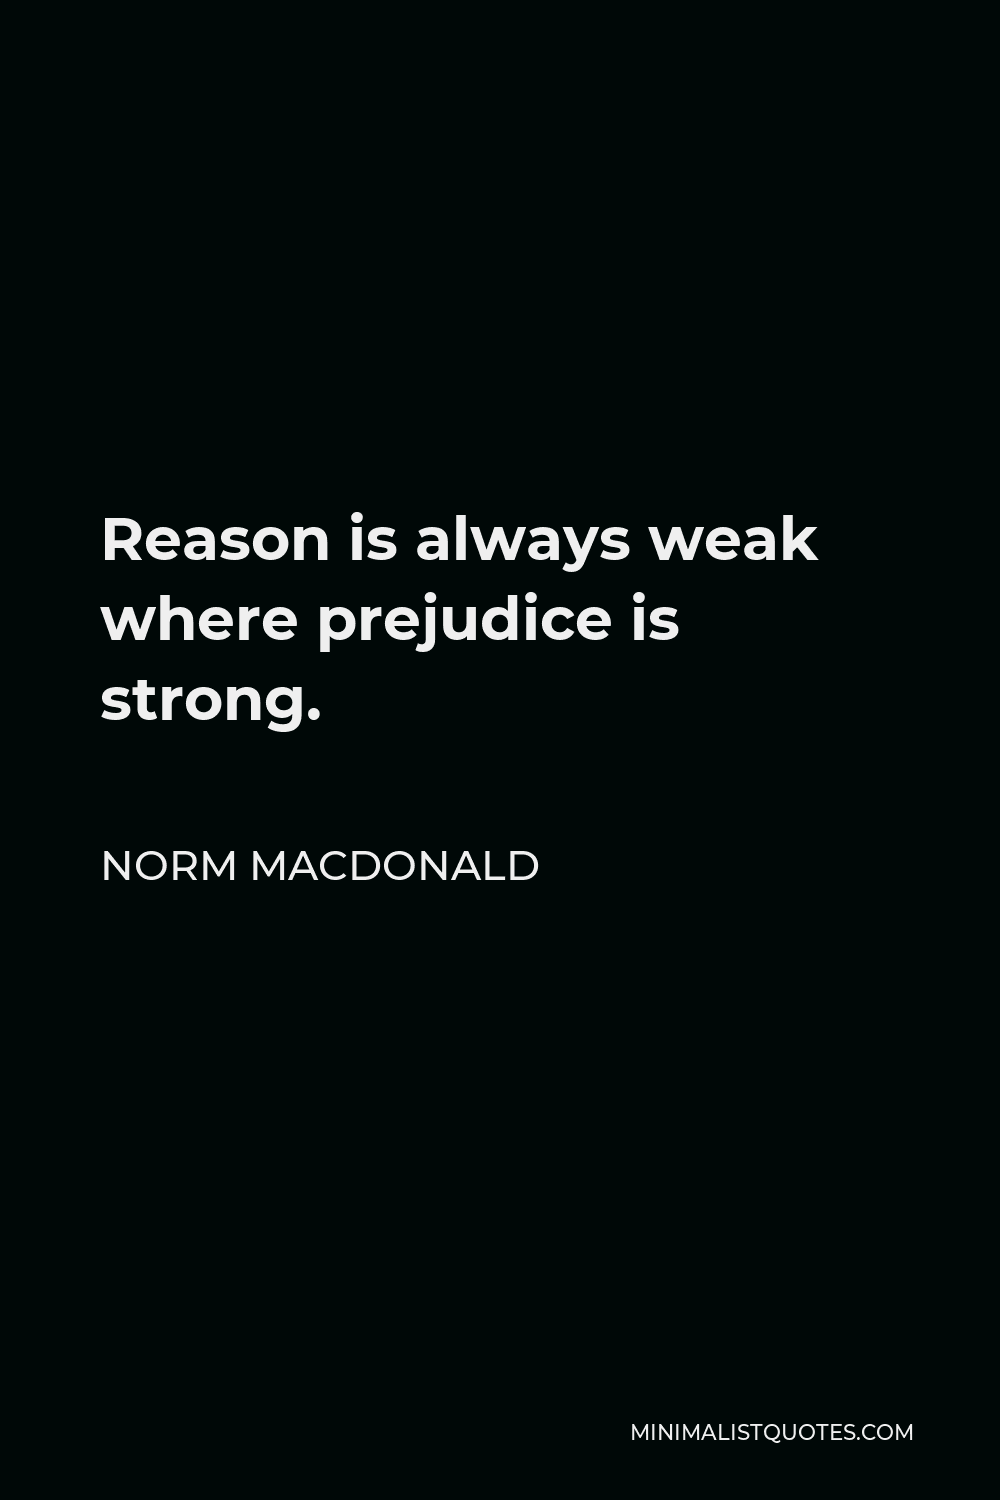 Norm MacDonald Quote - Reason is always weak where prejudice is strong.